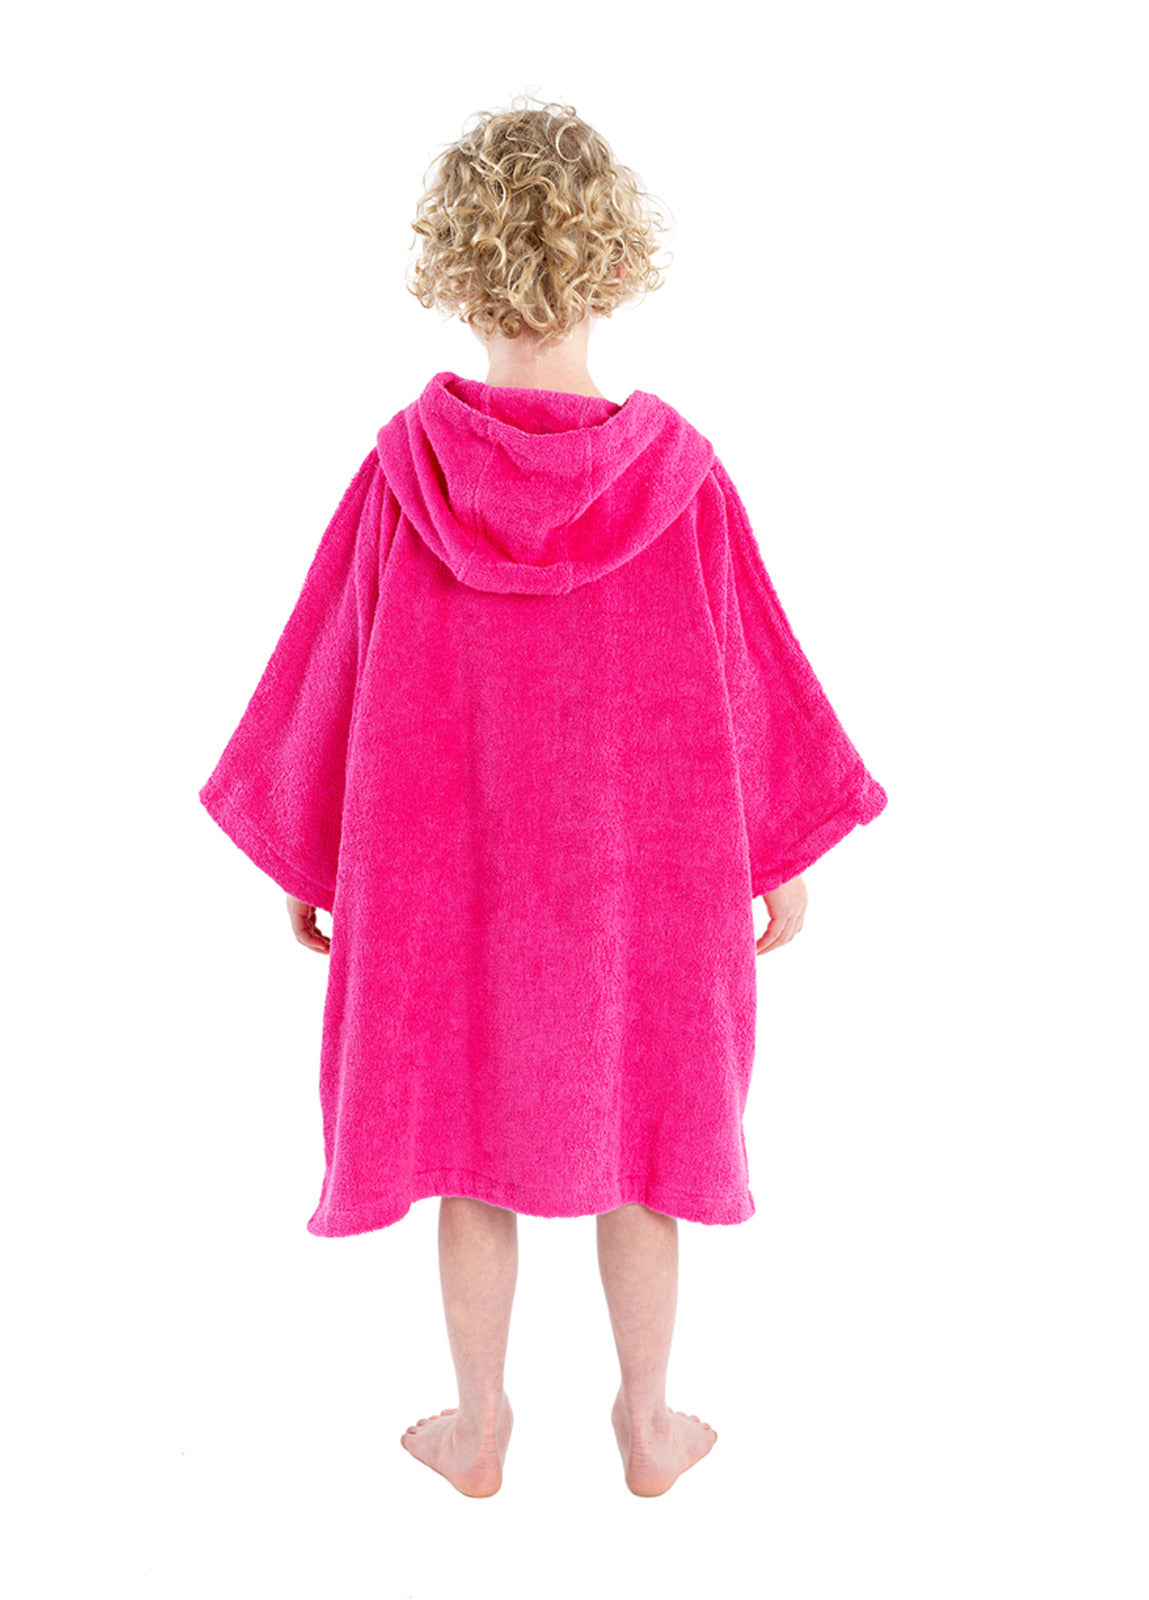 Dryrobe Kids Organic Towel dryrobe - Pink